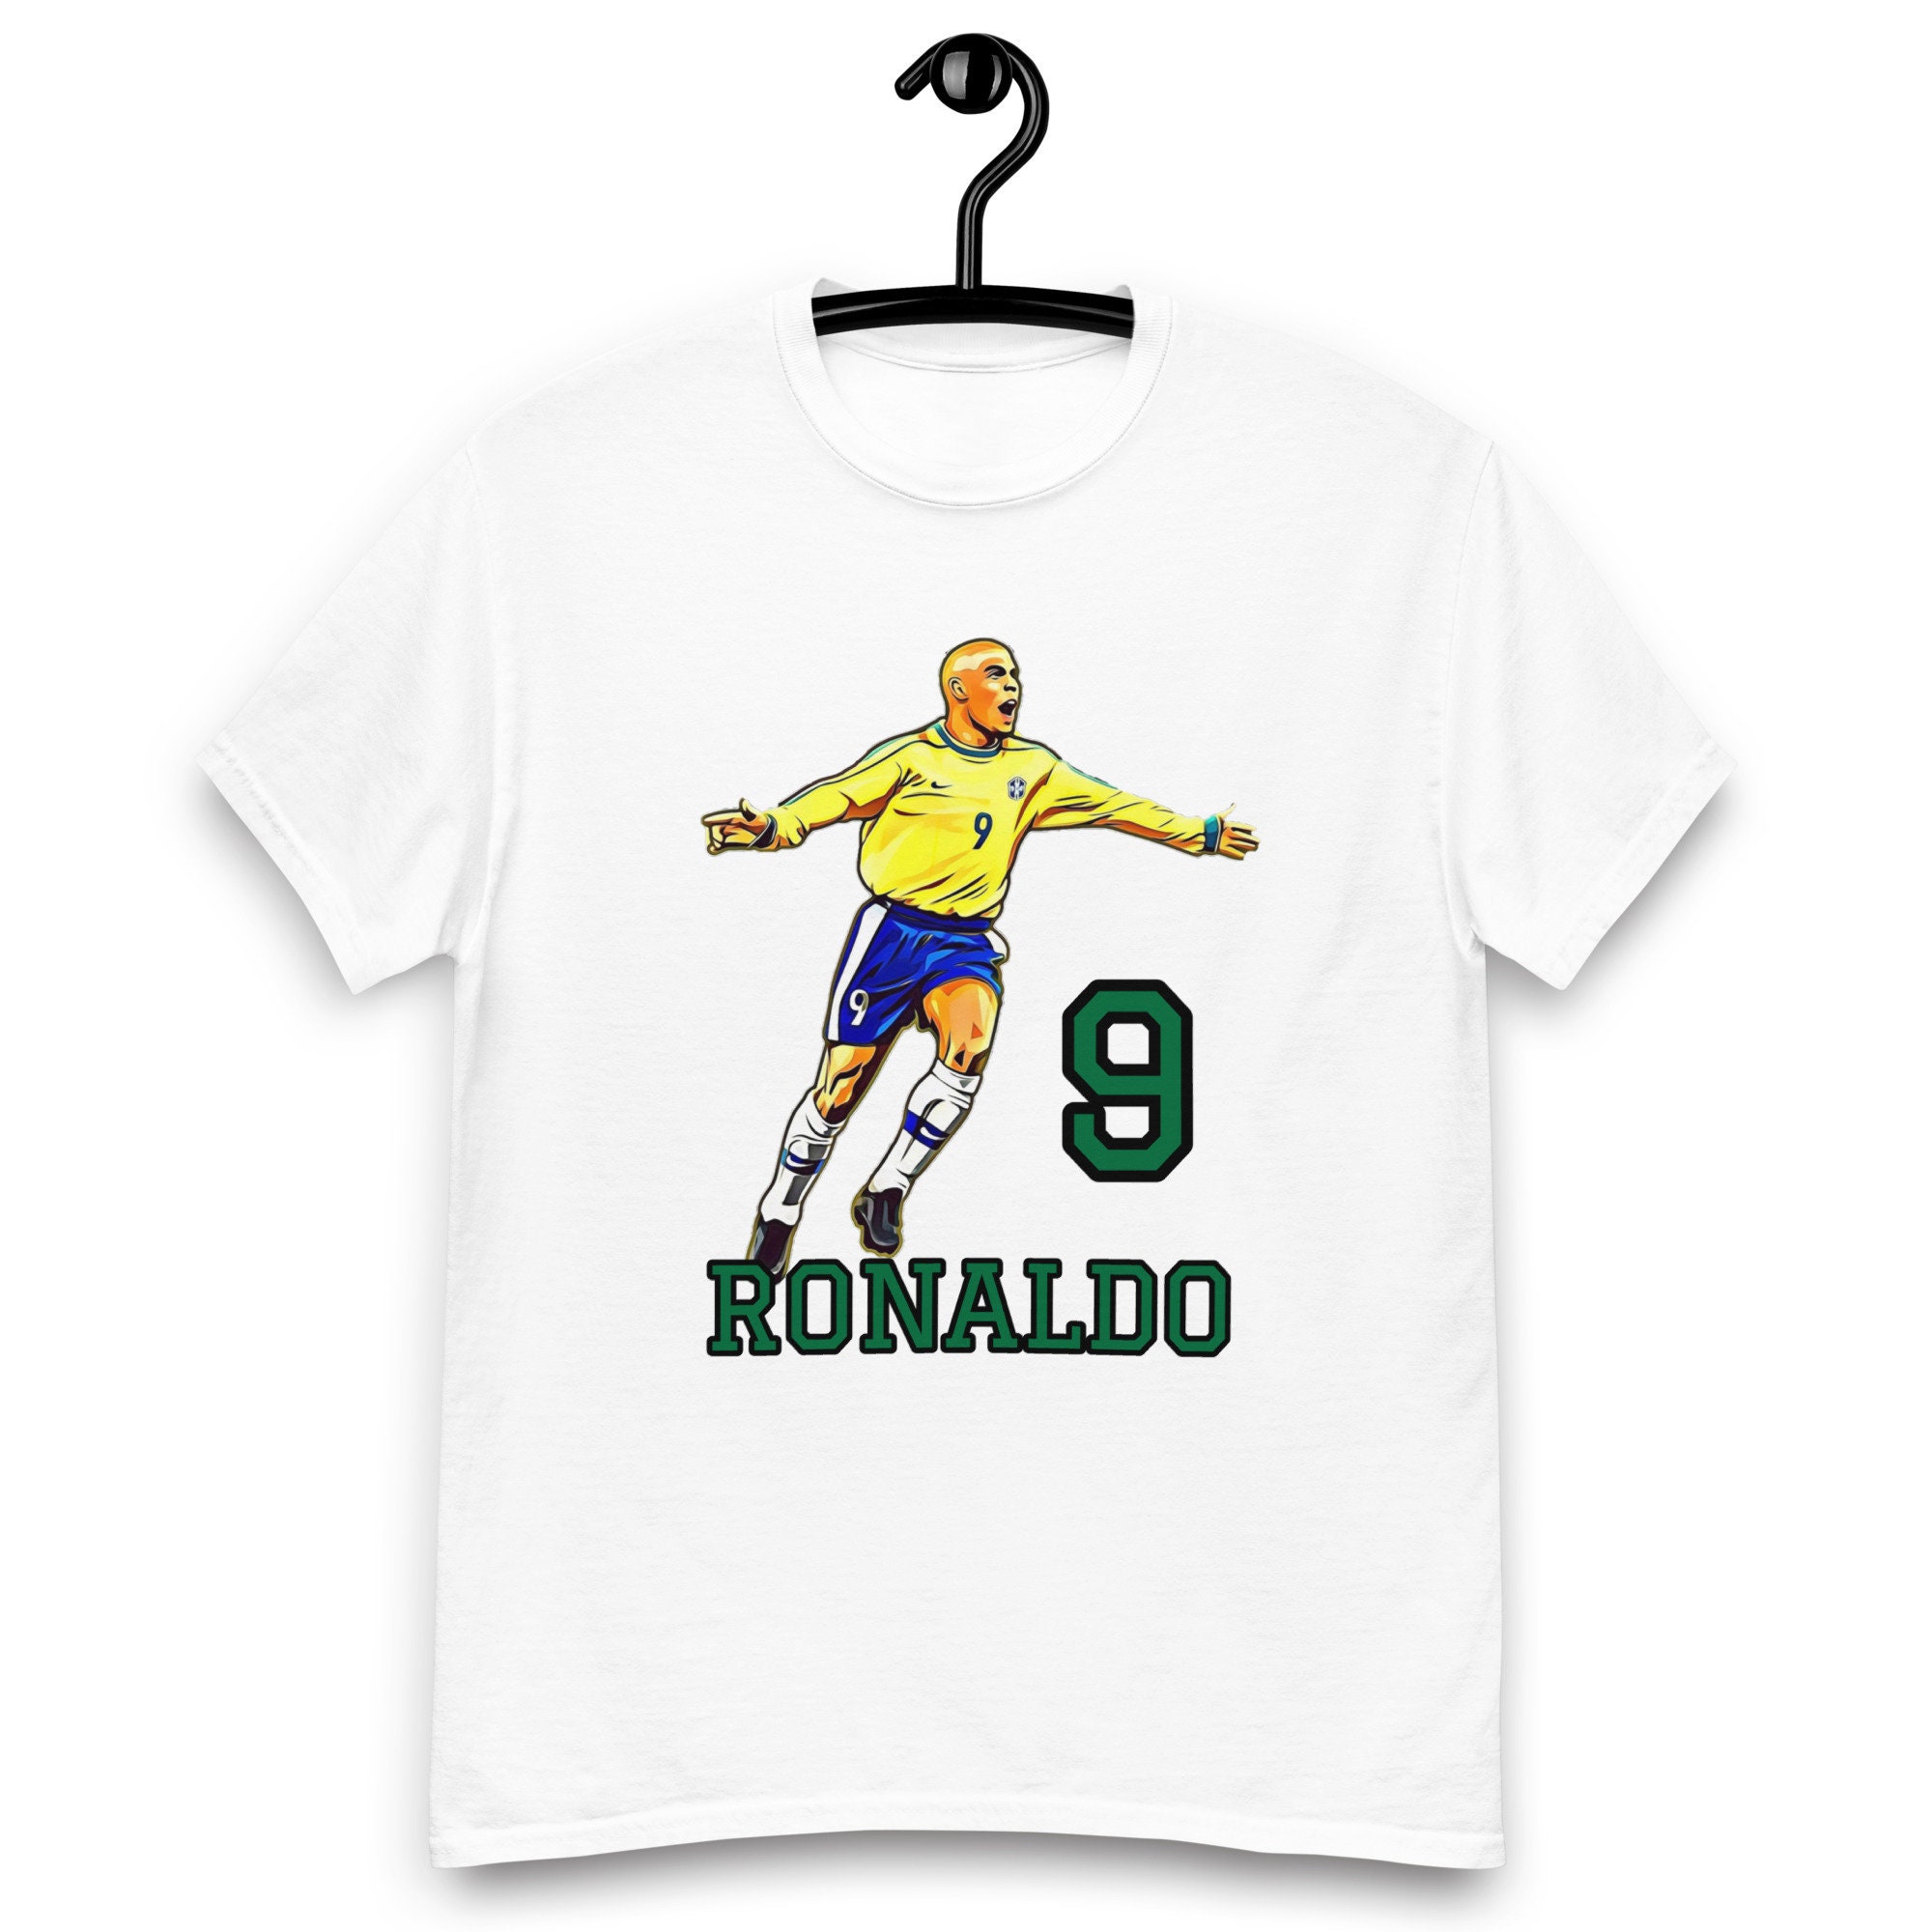 Ronaldo's powerful strikes in Brazil's shirt